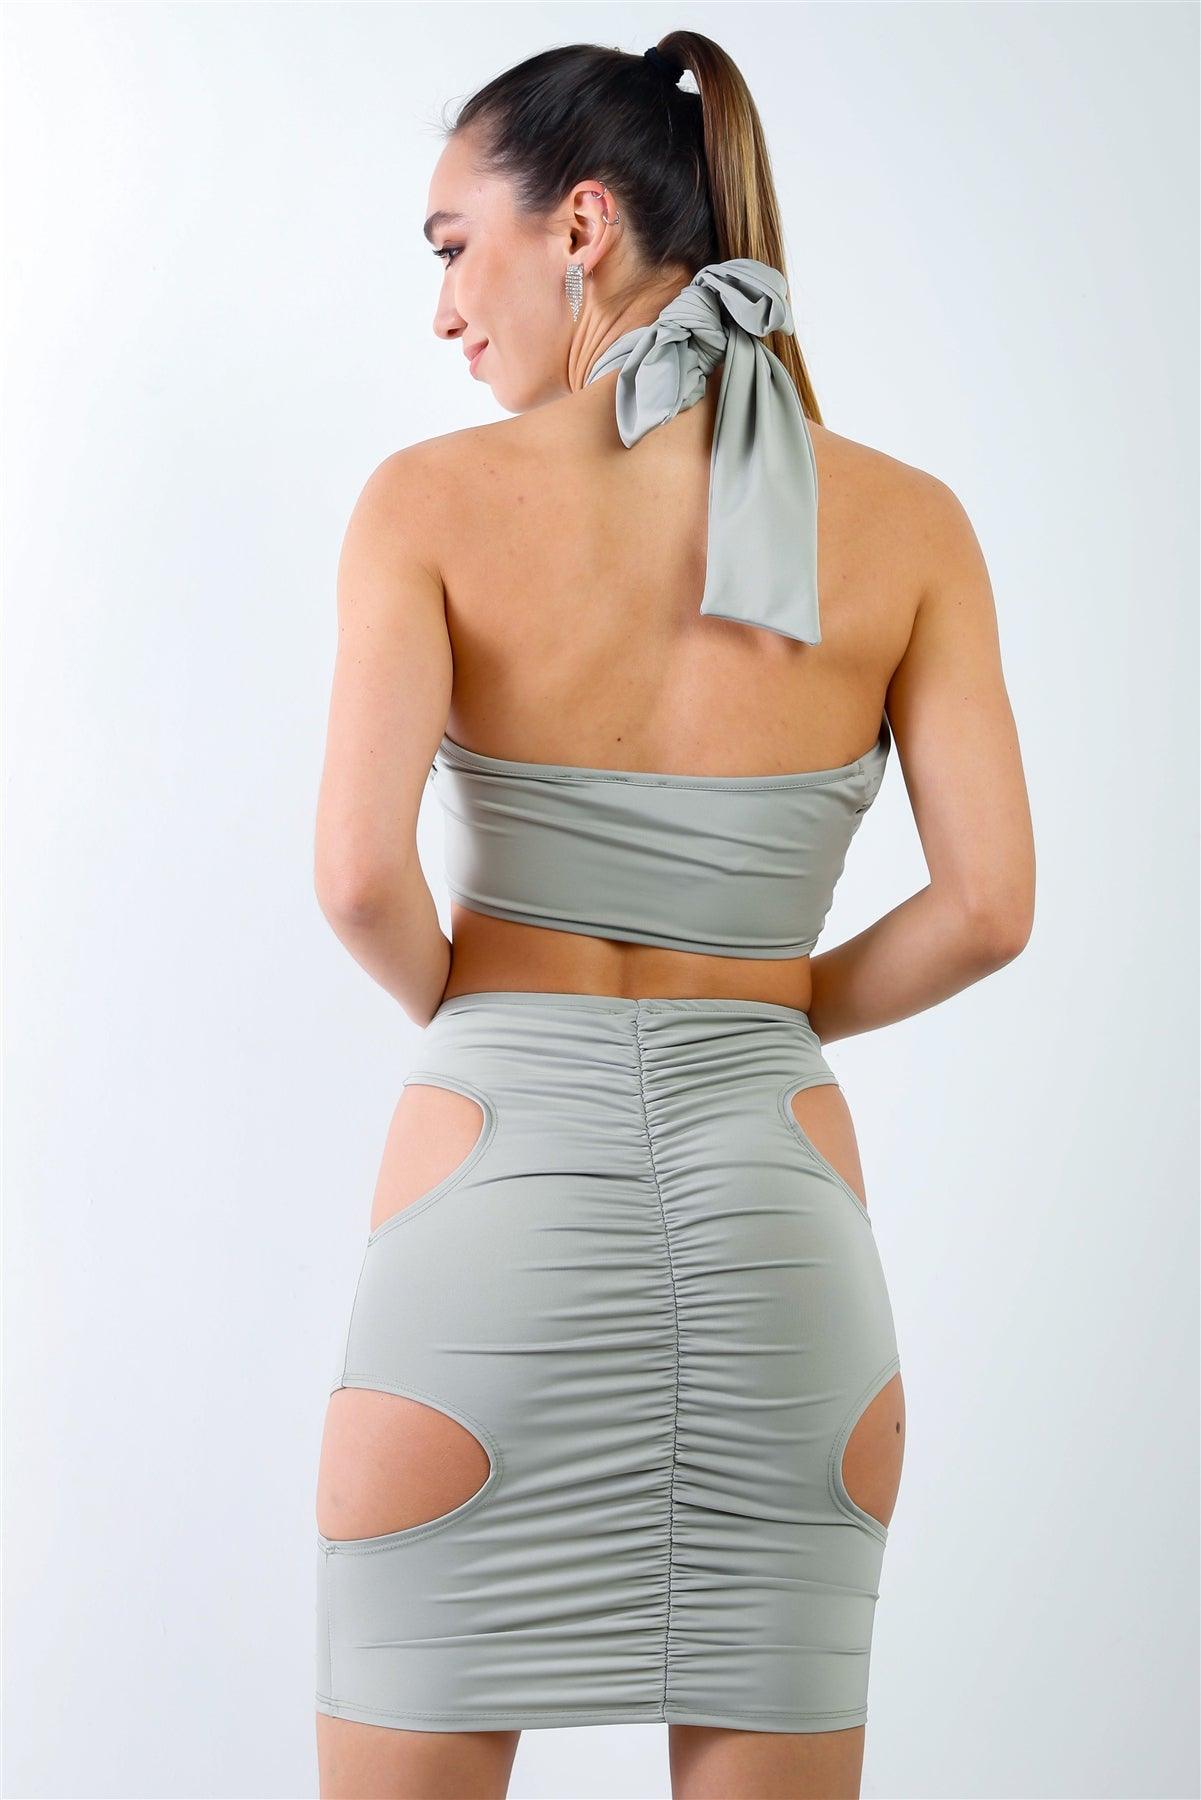 Sage Wraparound Halter Top & Ruched Side Cut-Out Details Skirt Set /2-2-2